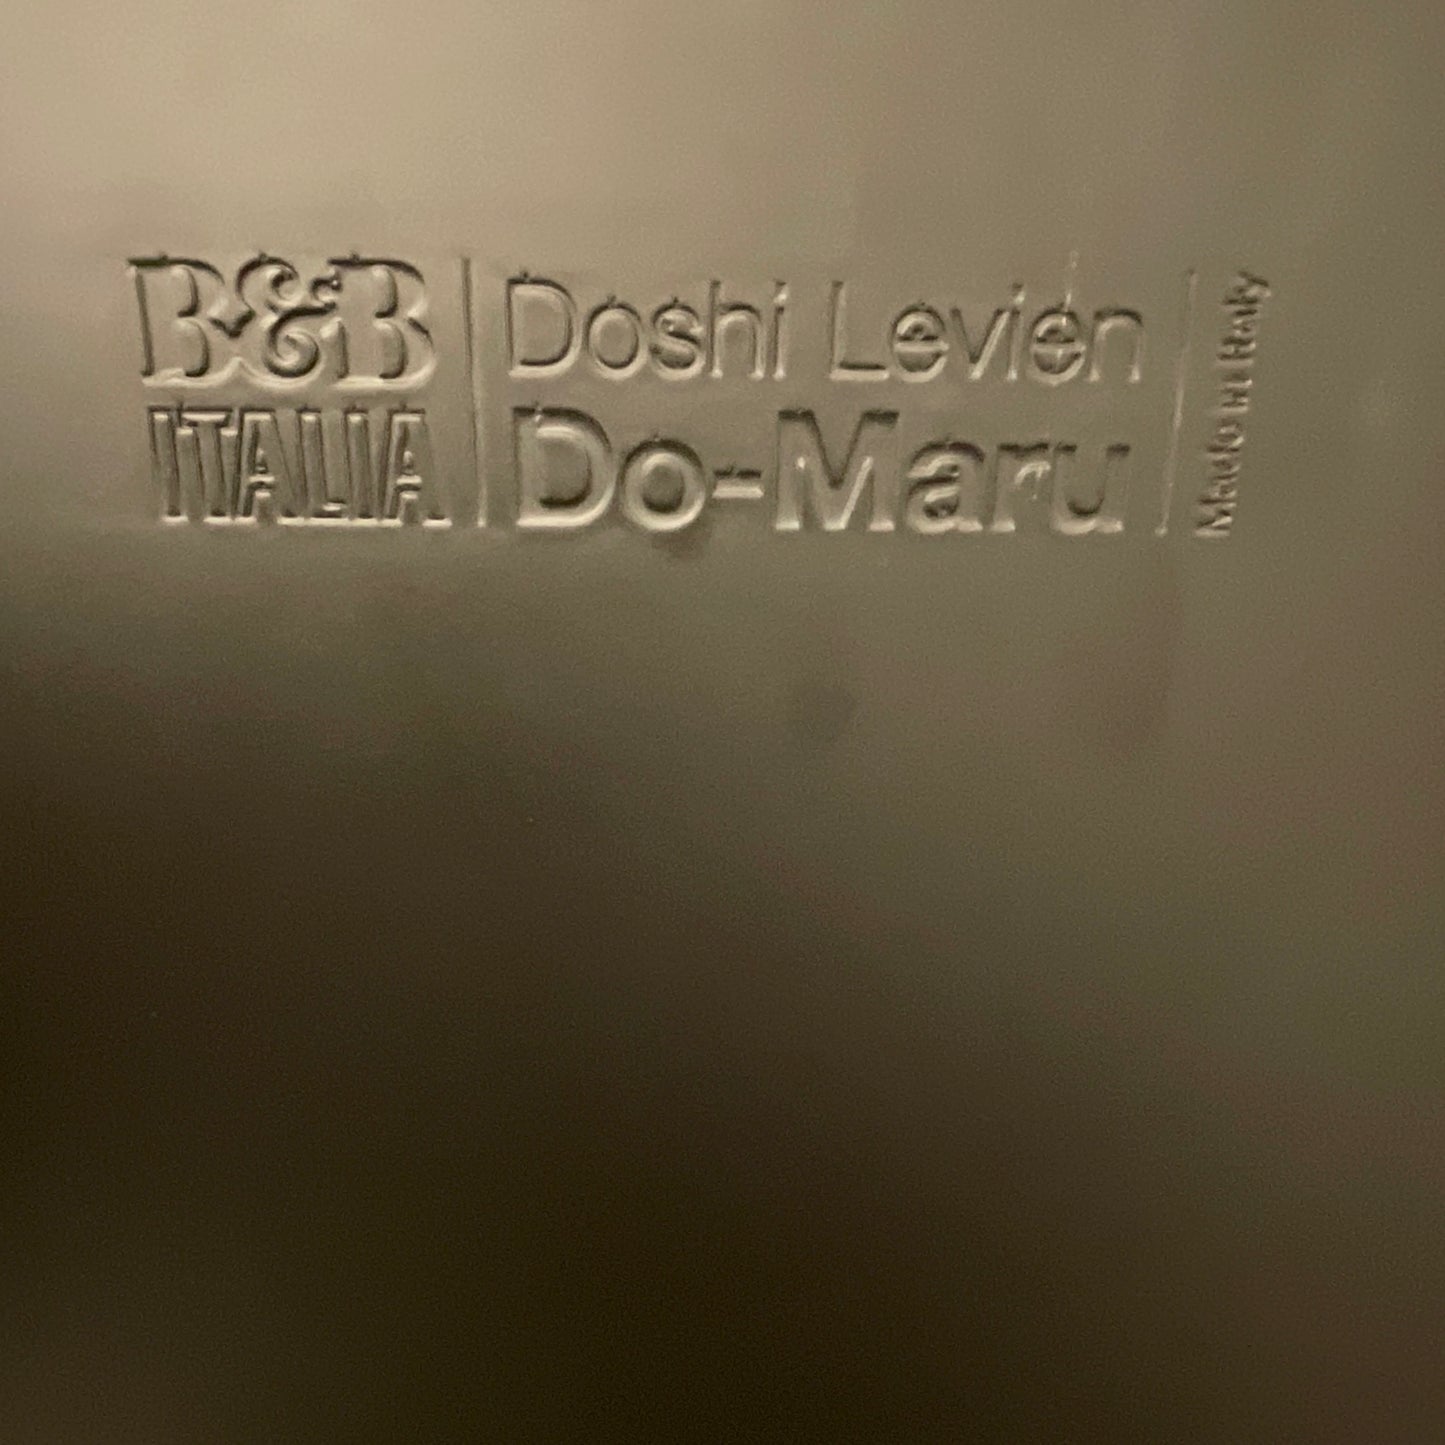 Do-Maru Armchair by Doshi & Levien for B&B Italia (2 available)